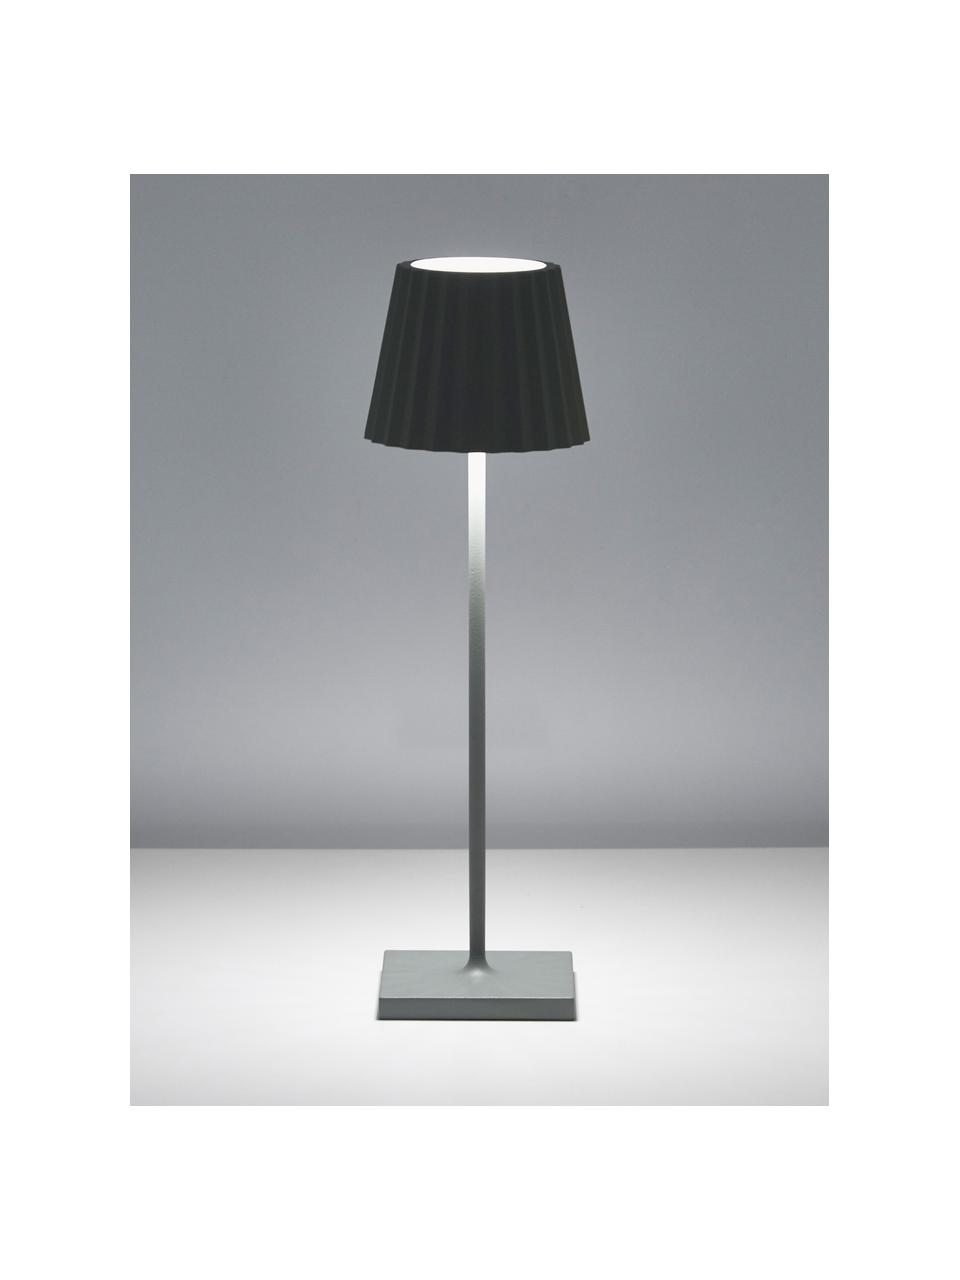 Lámpara LED regulable para exterior Trellia, portátil, Pantalla: aluminio pintado, Verde salvia, Ø 12 x Al 38 cm